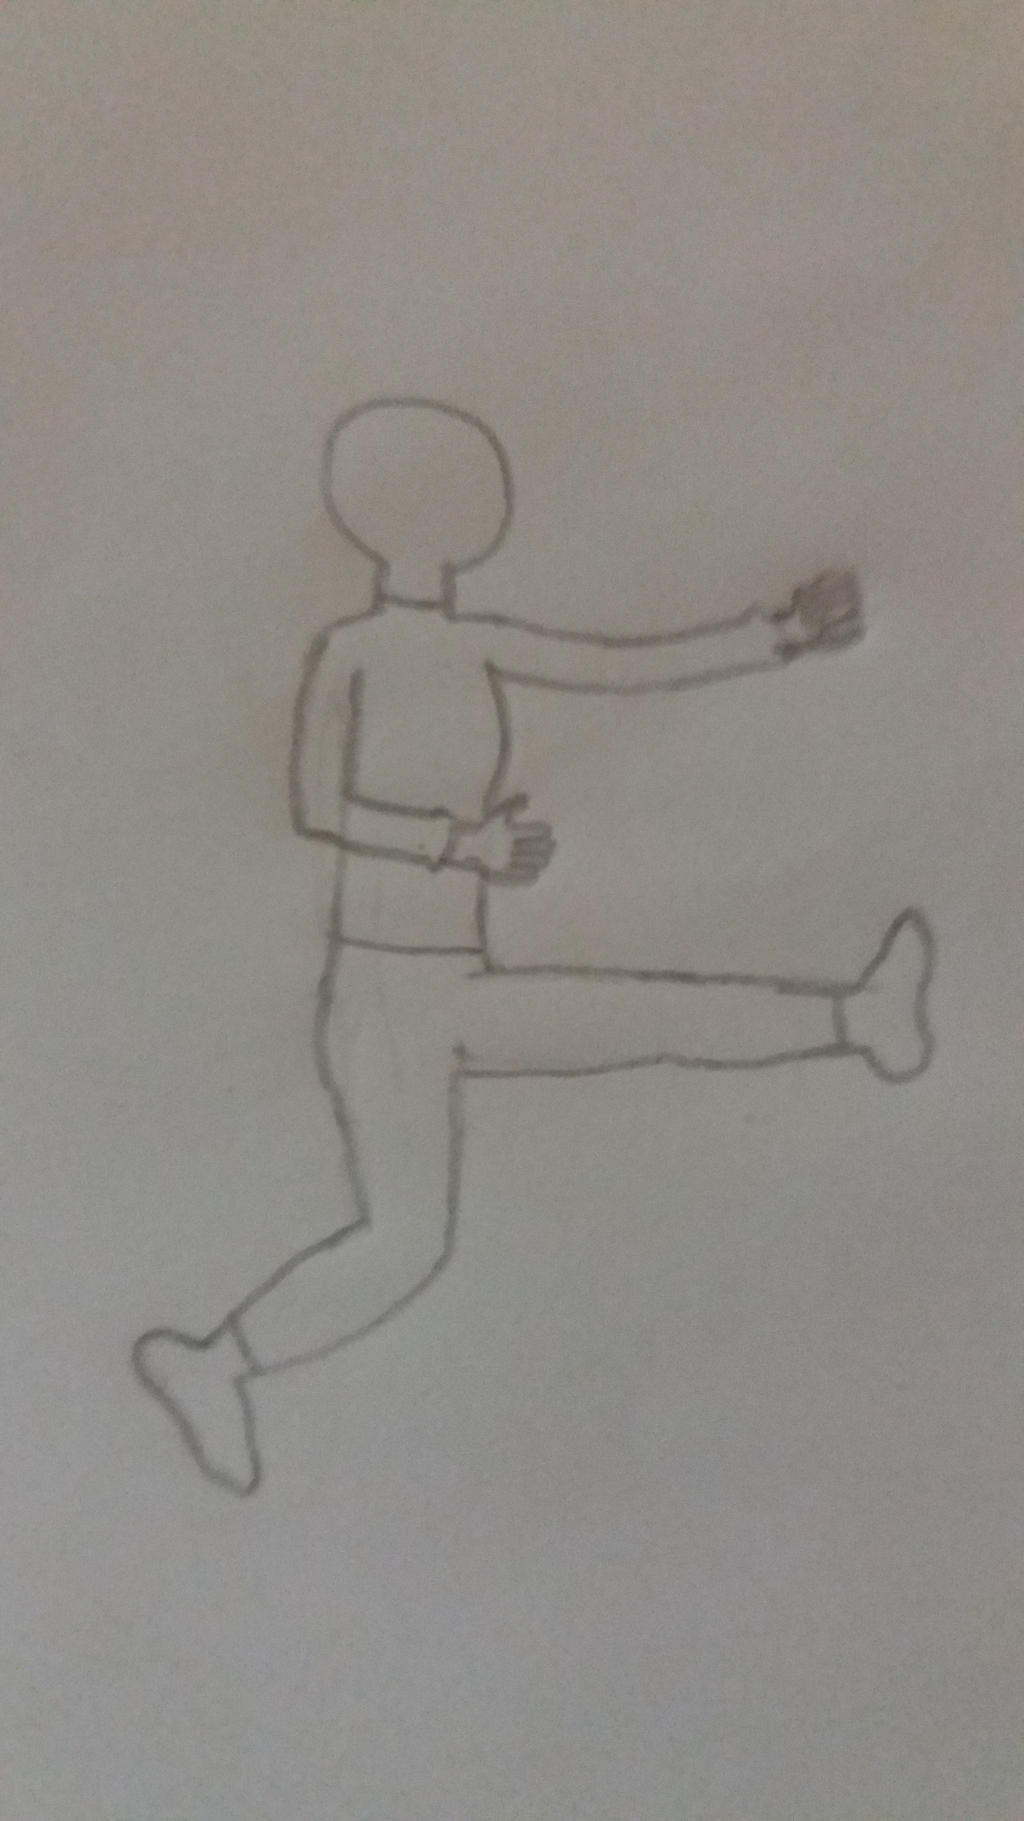 Kicking poses with female body (anatomy practice)